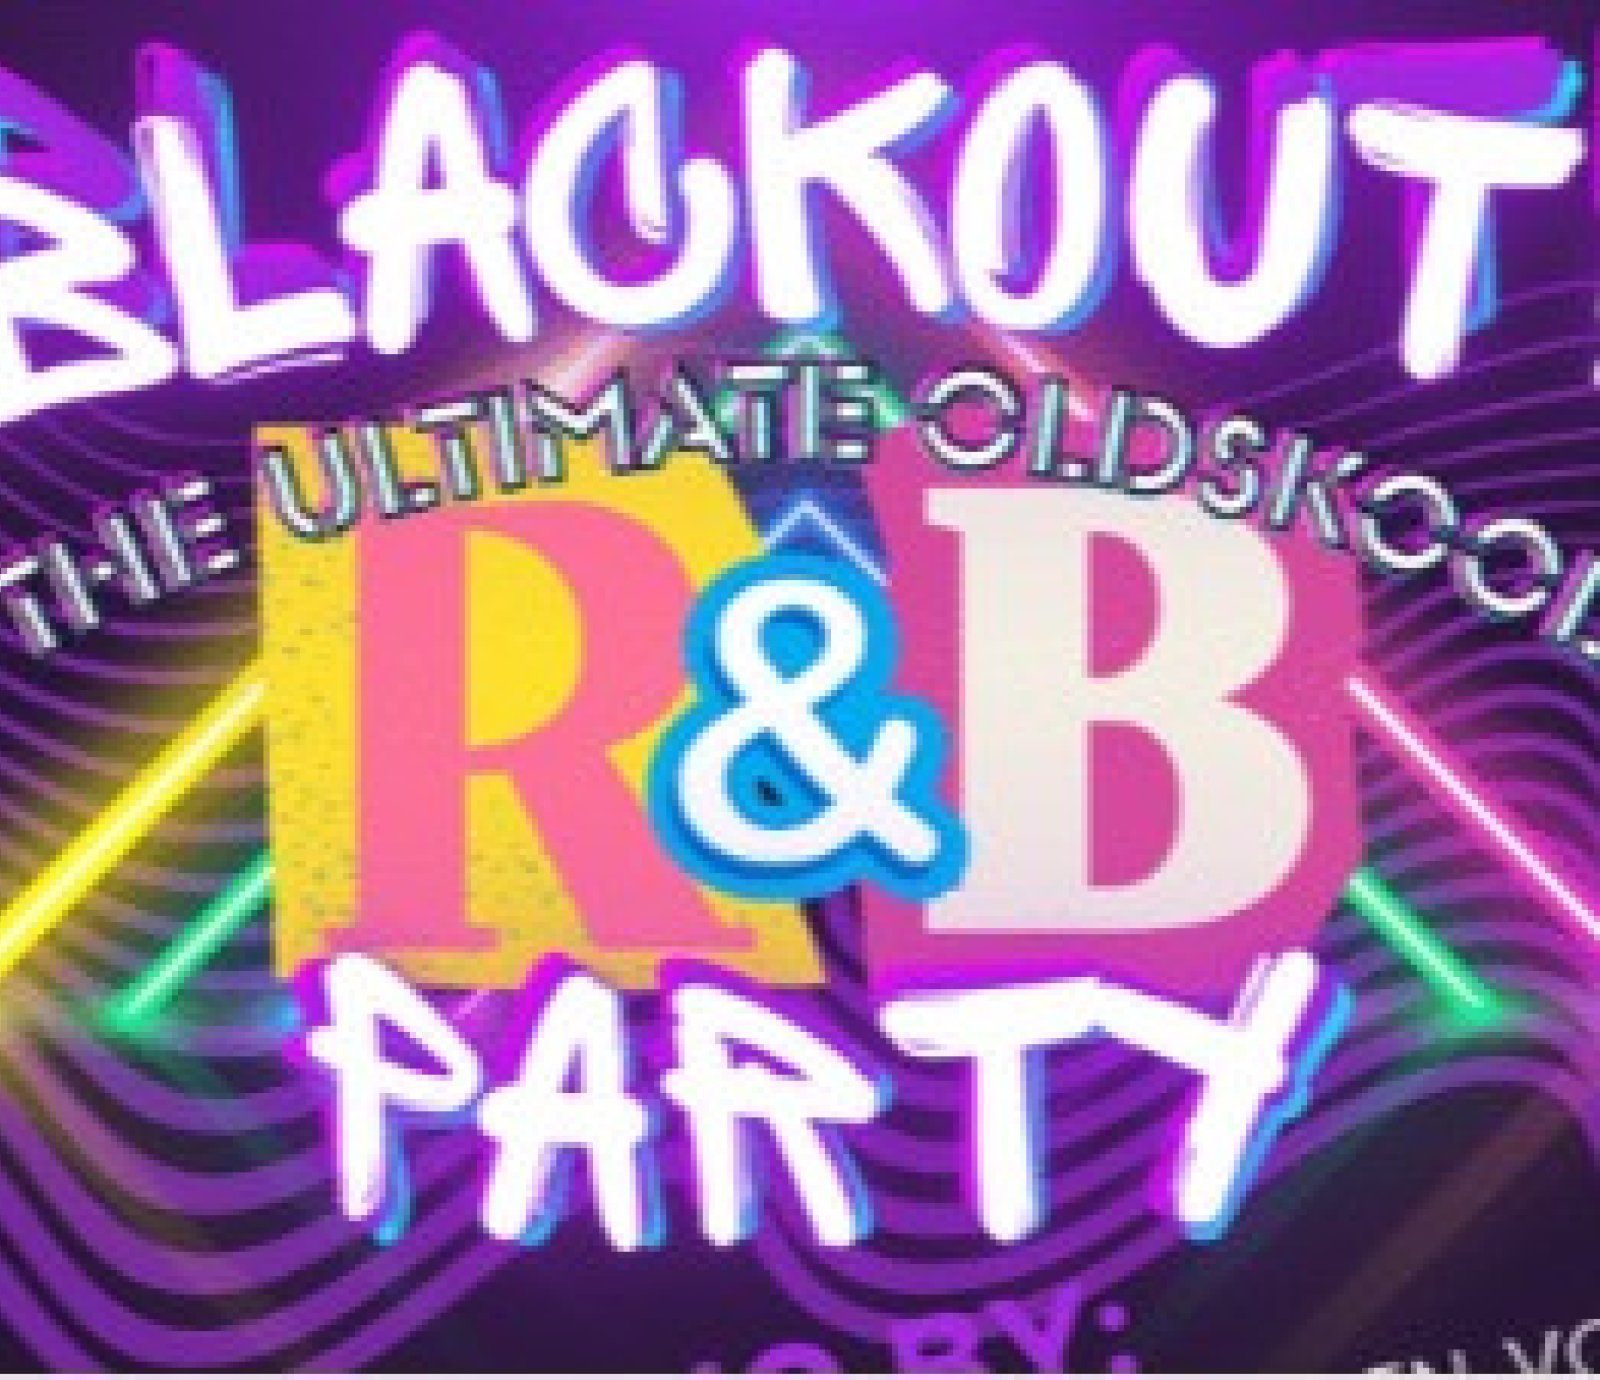 Blackout! The Ultimate 90’s-00’s R&B Dj Night